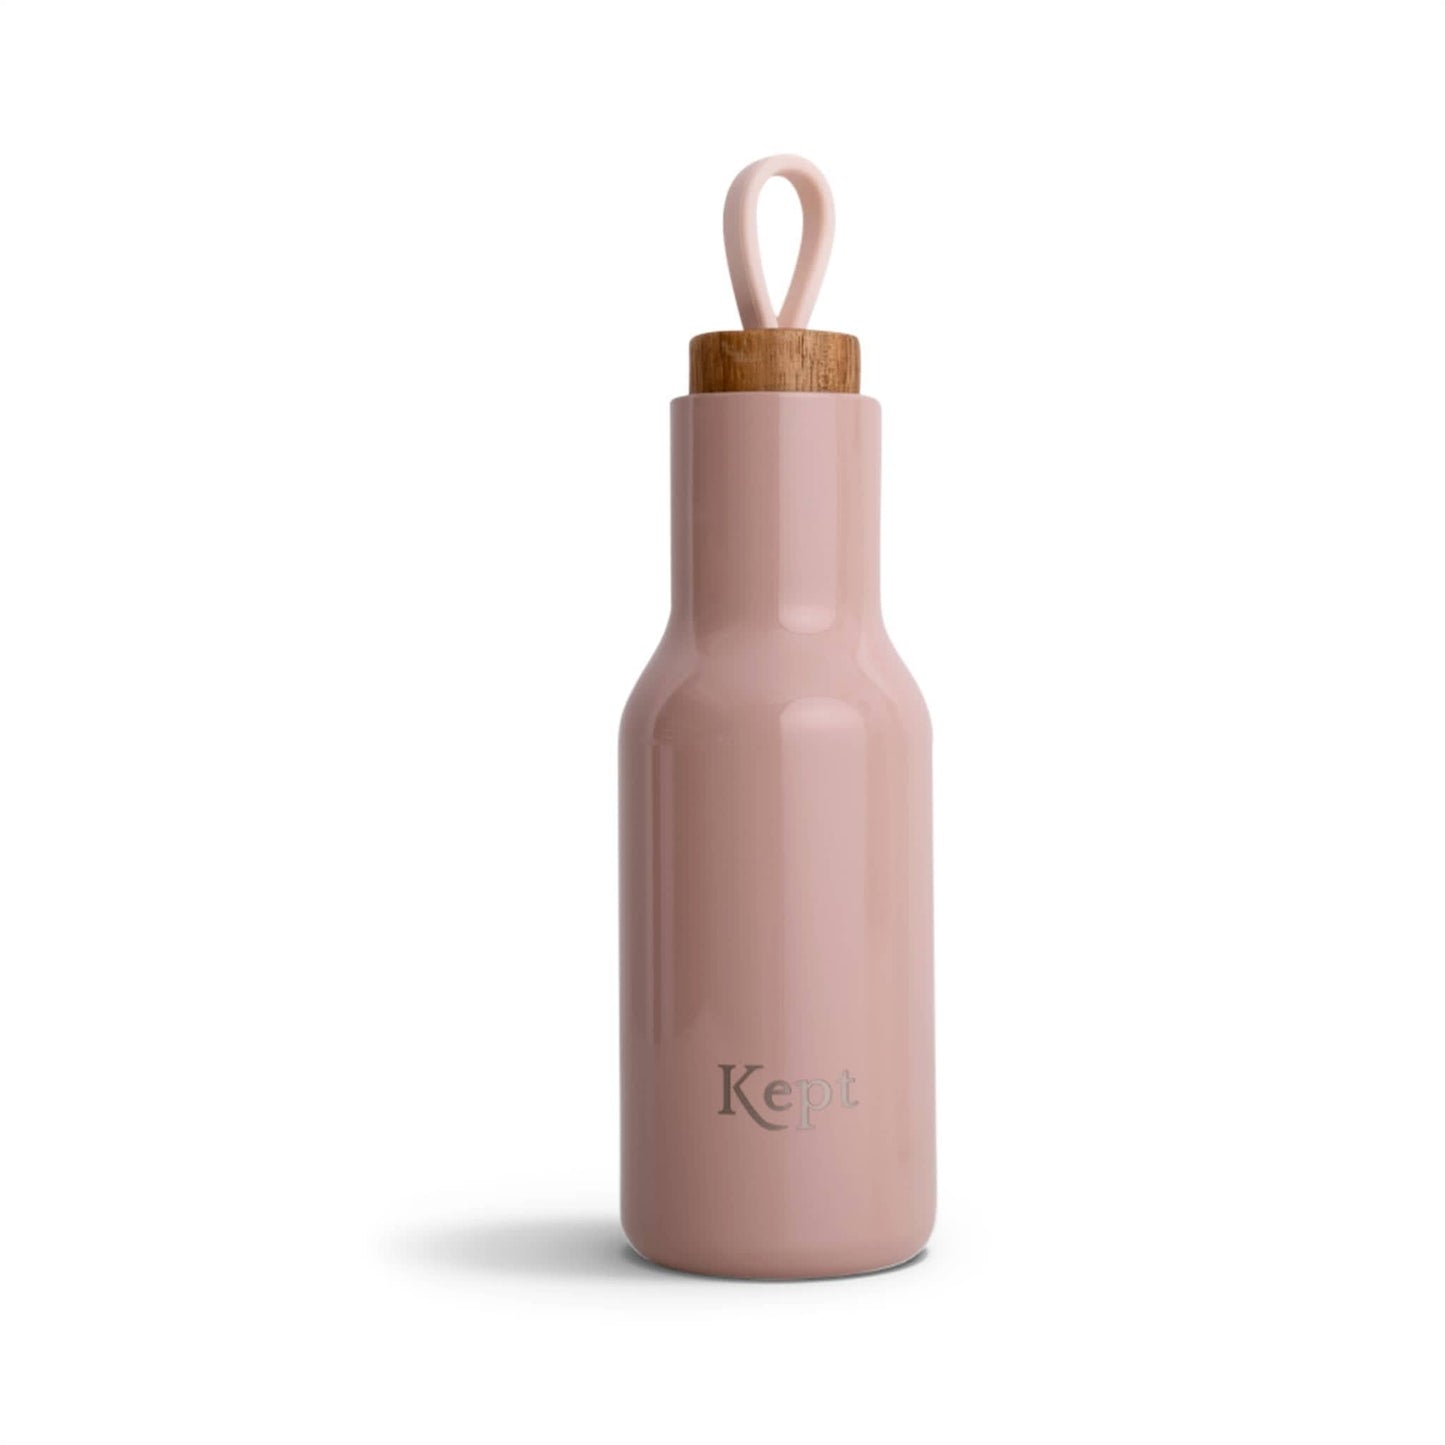 Kept Water Bottles Sandstone Pink Kept Stainless Steel Vacuum Insulated Reusable Water Bottle – 600ml